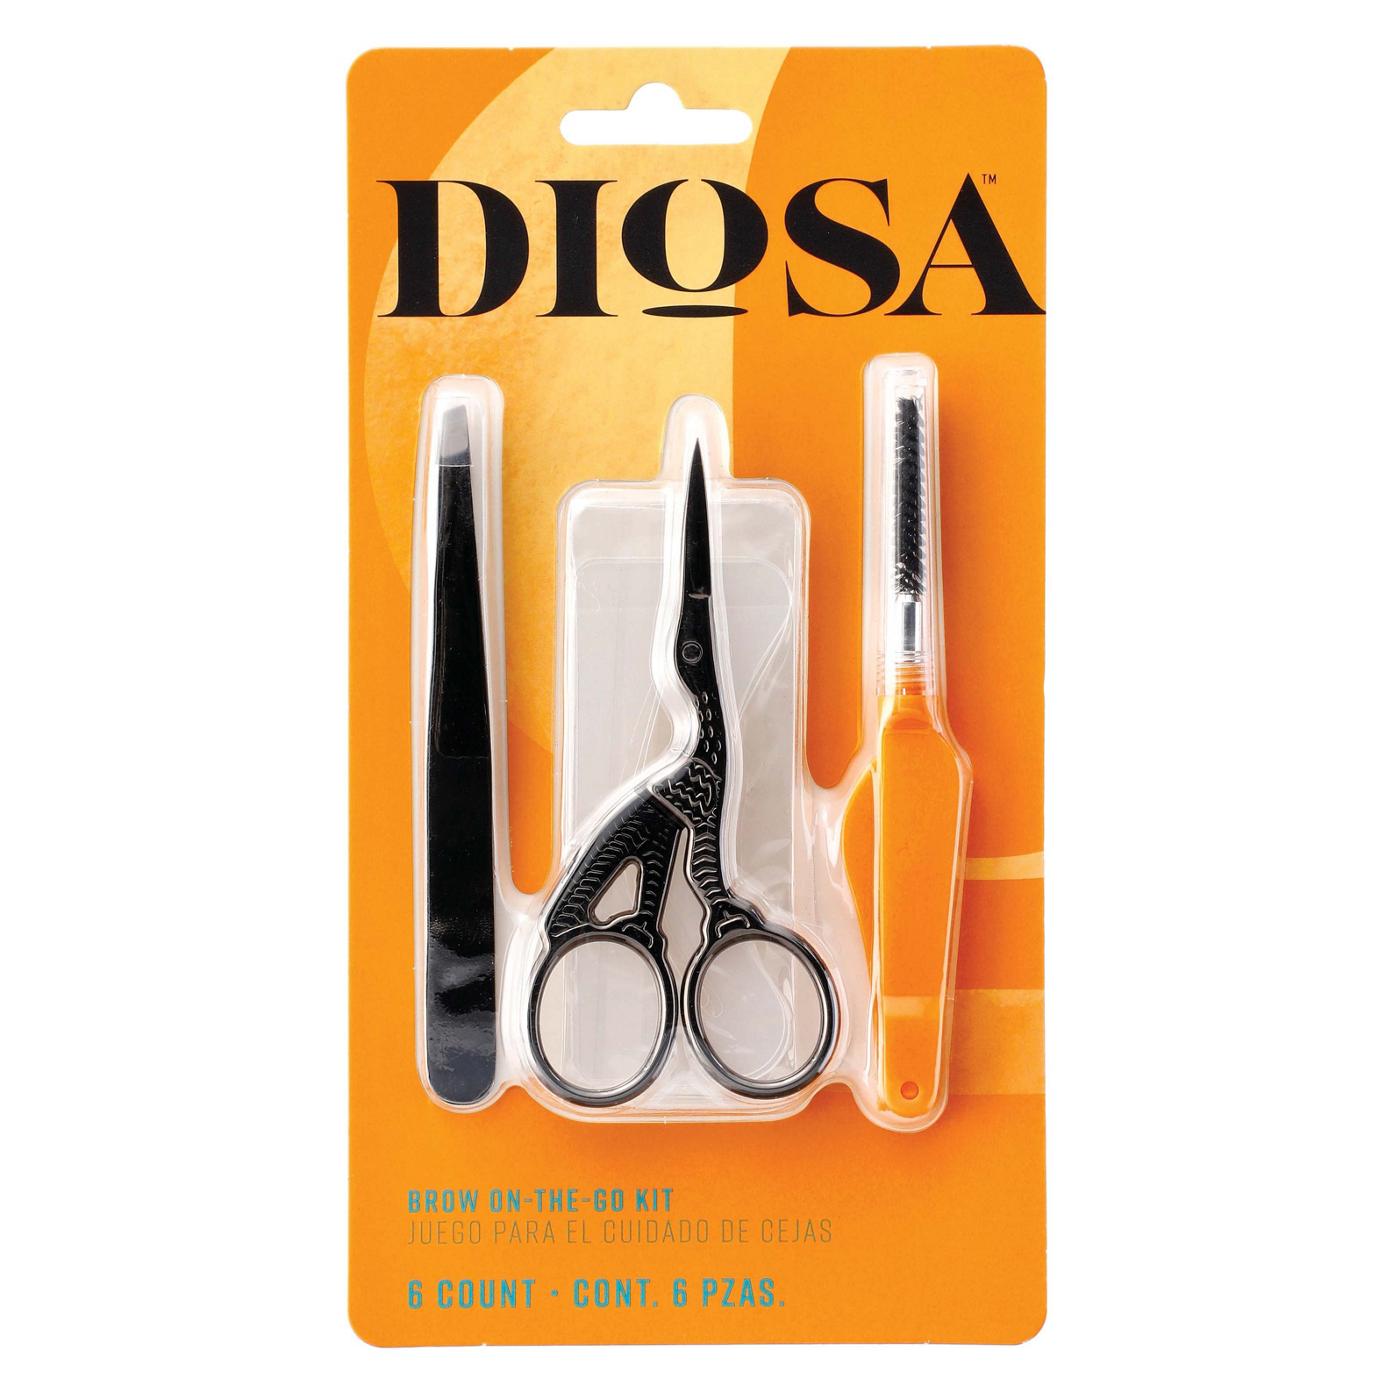 Diosa On-the-Go Eyebrow Kit; image 1 of 5